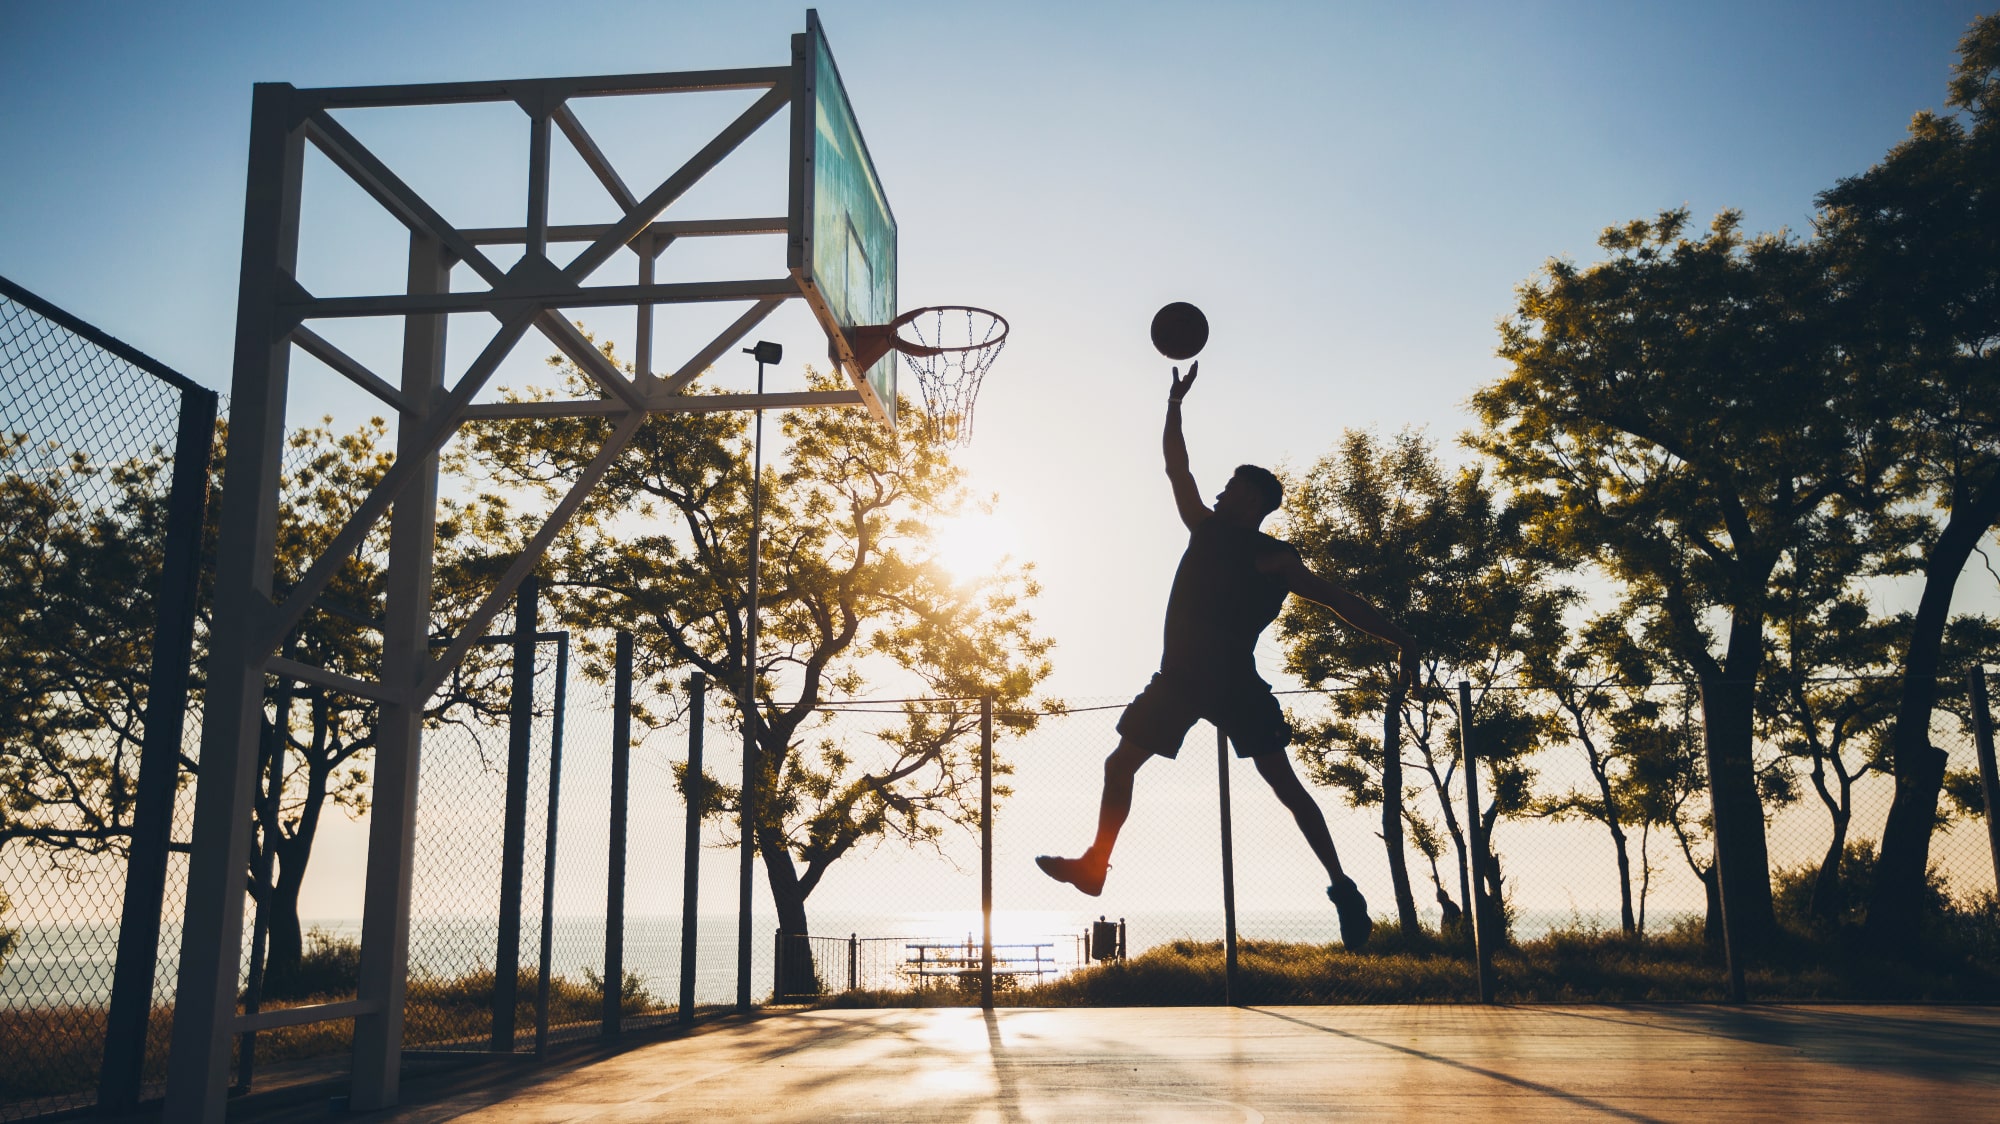 pallacanestro osteopata trattamento